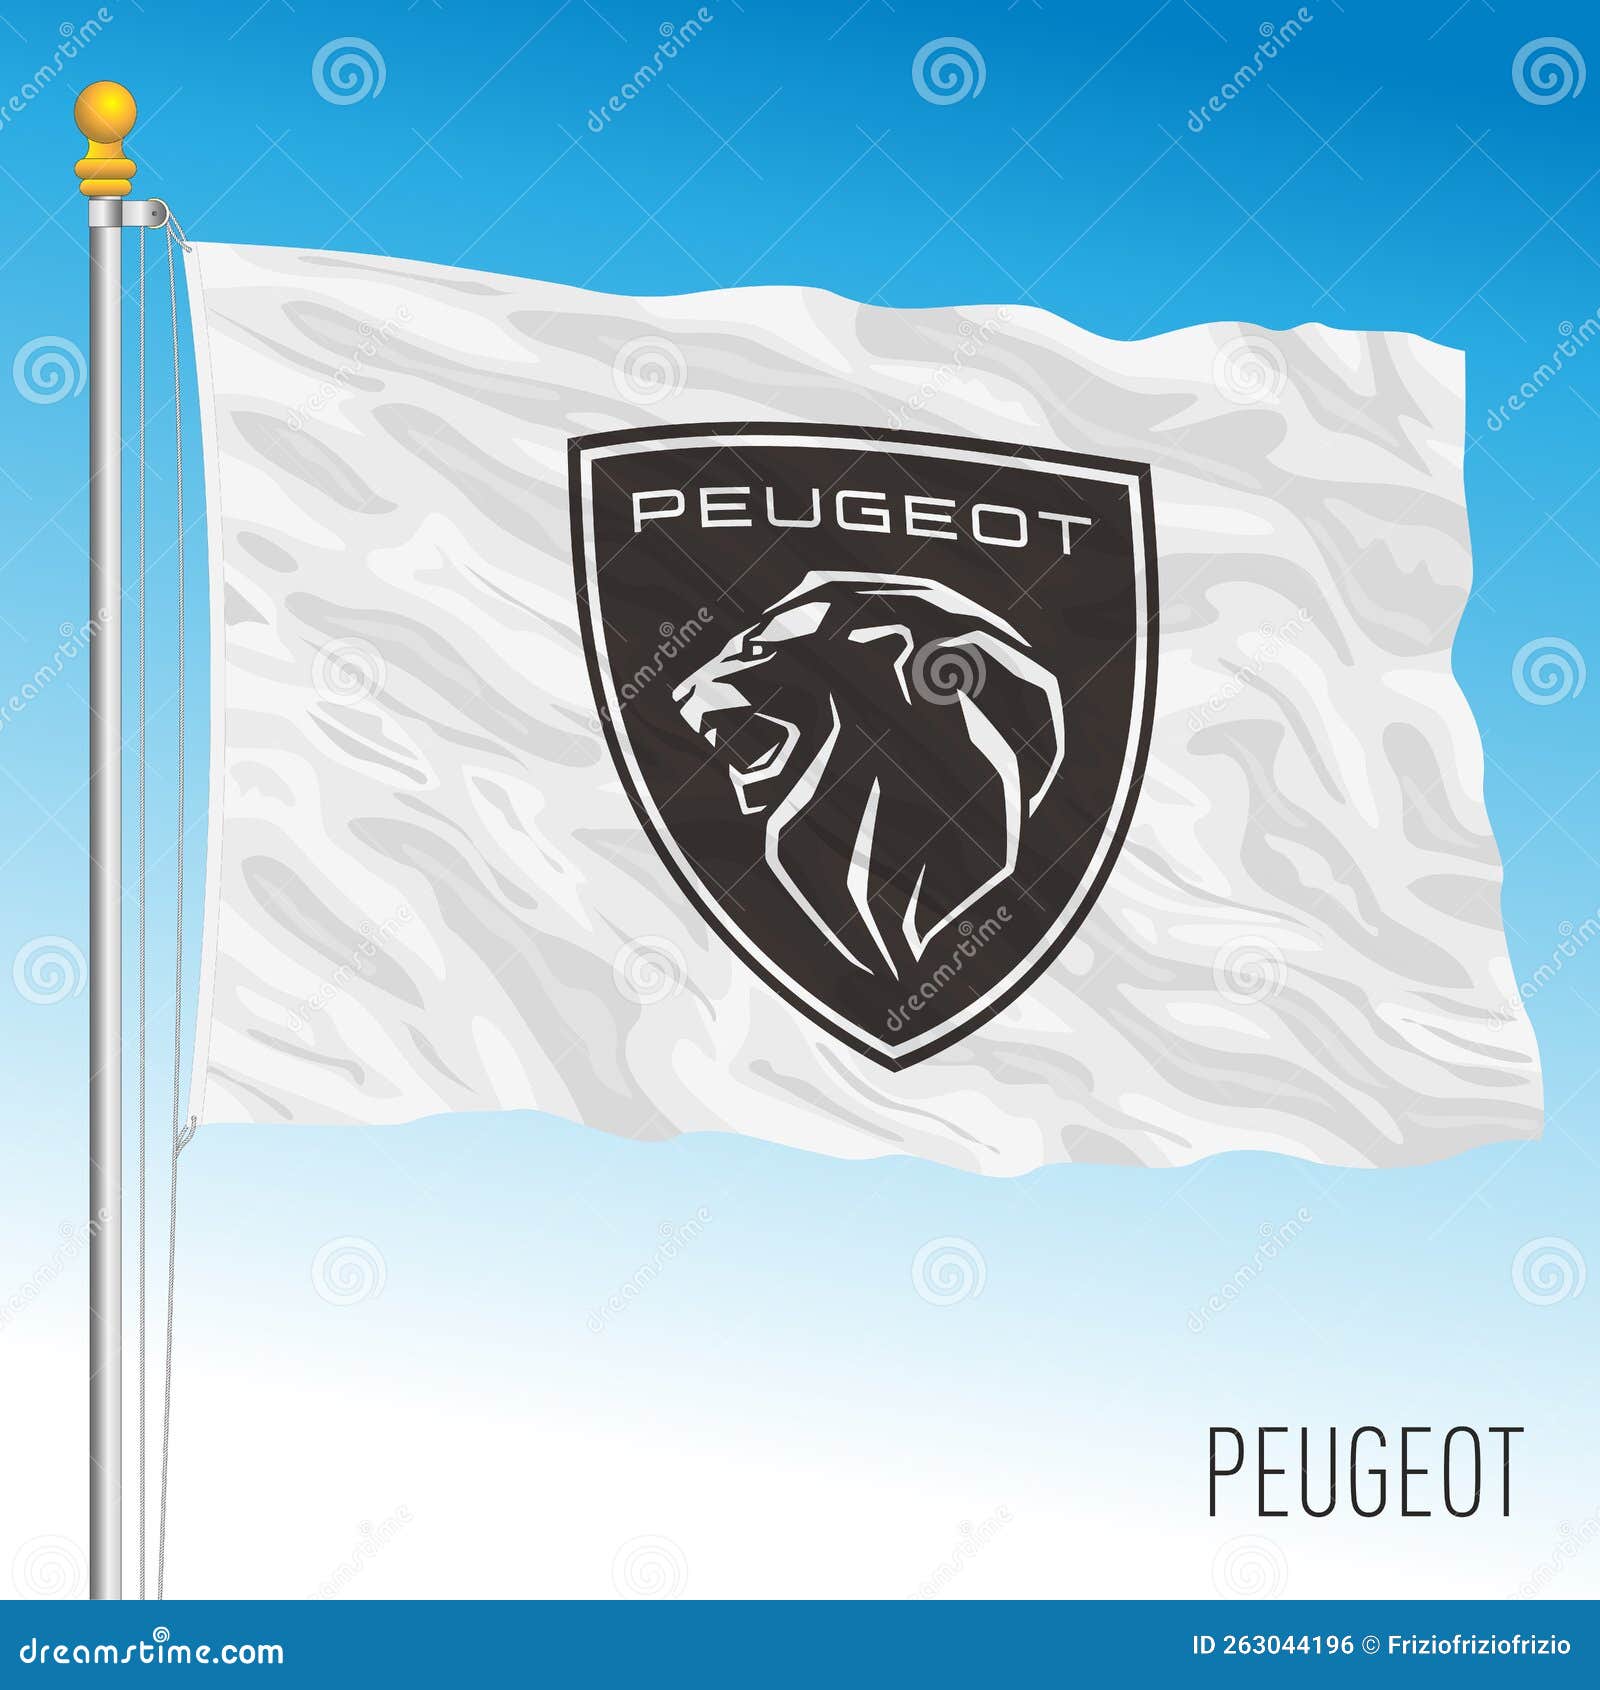 Logo peugeot -  France